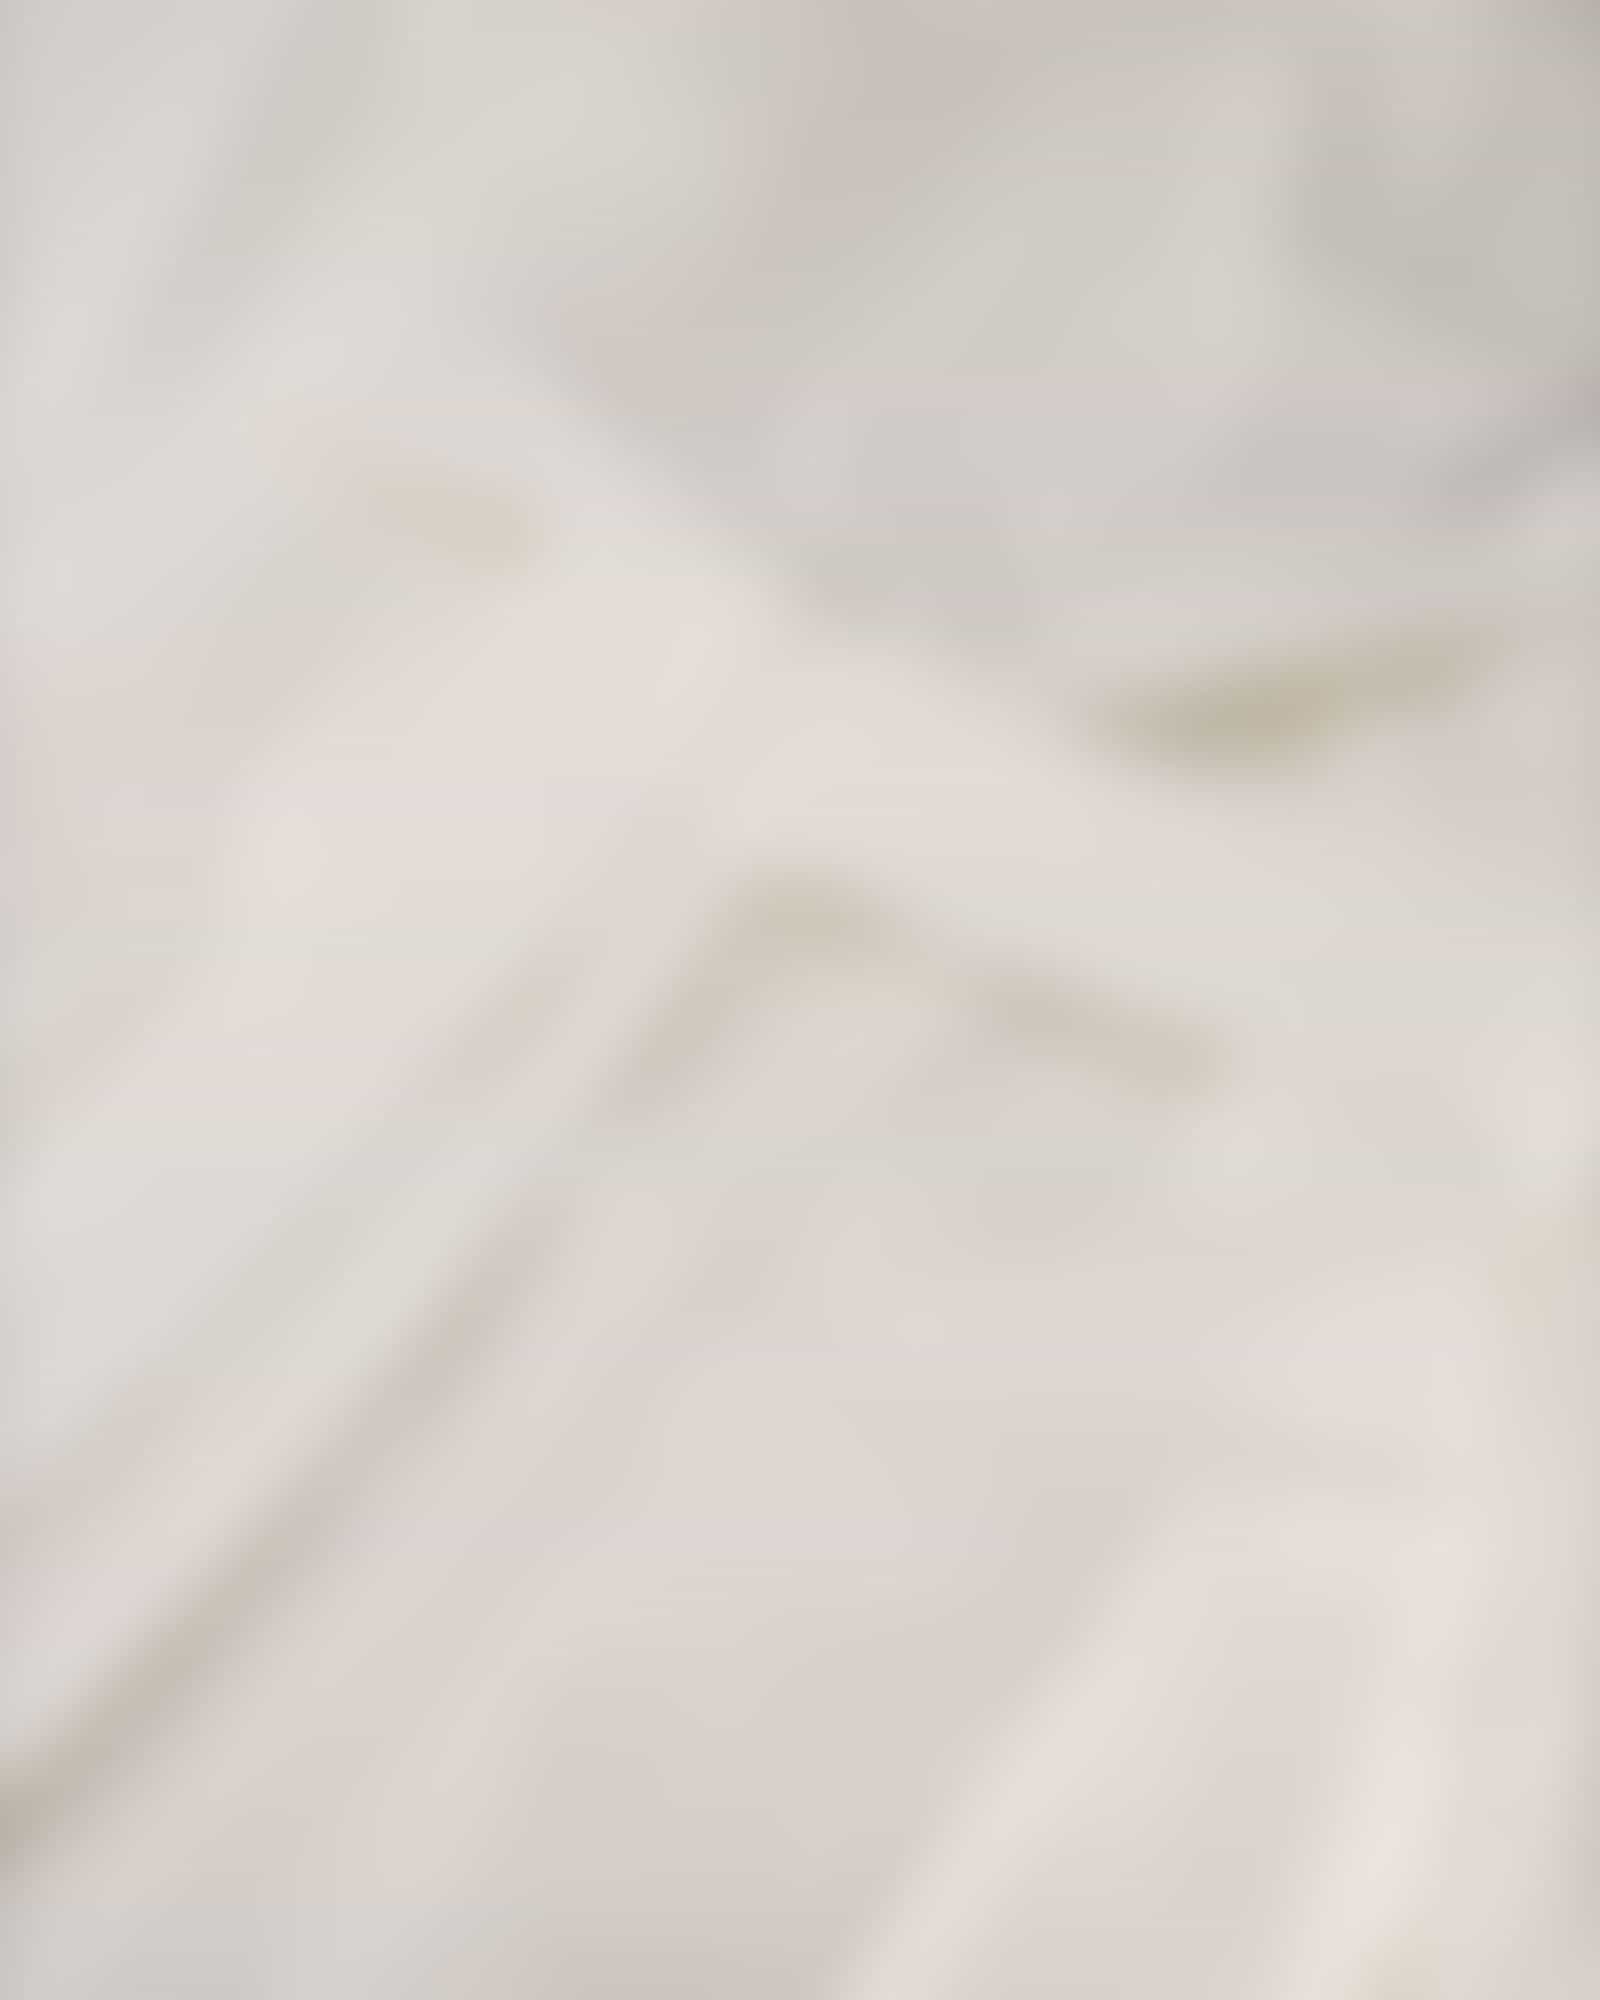 JOOP Herren Bademantel Kimono Pique 1656 - Farbe: Weiß - 600 - M Detailbild 3